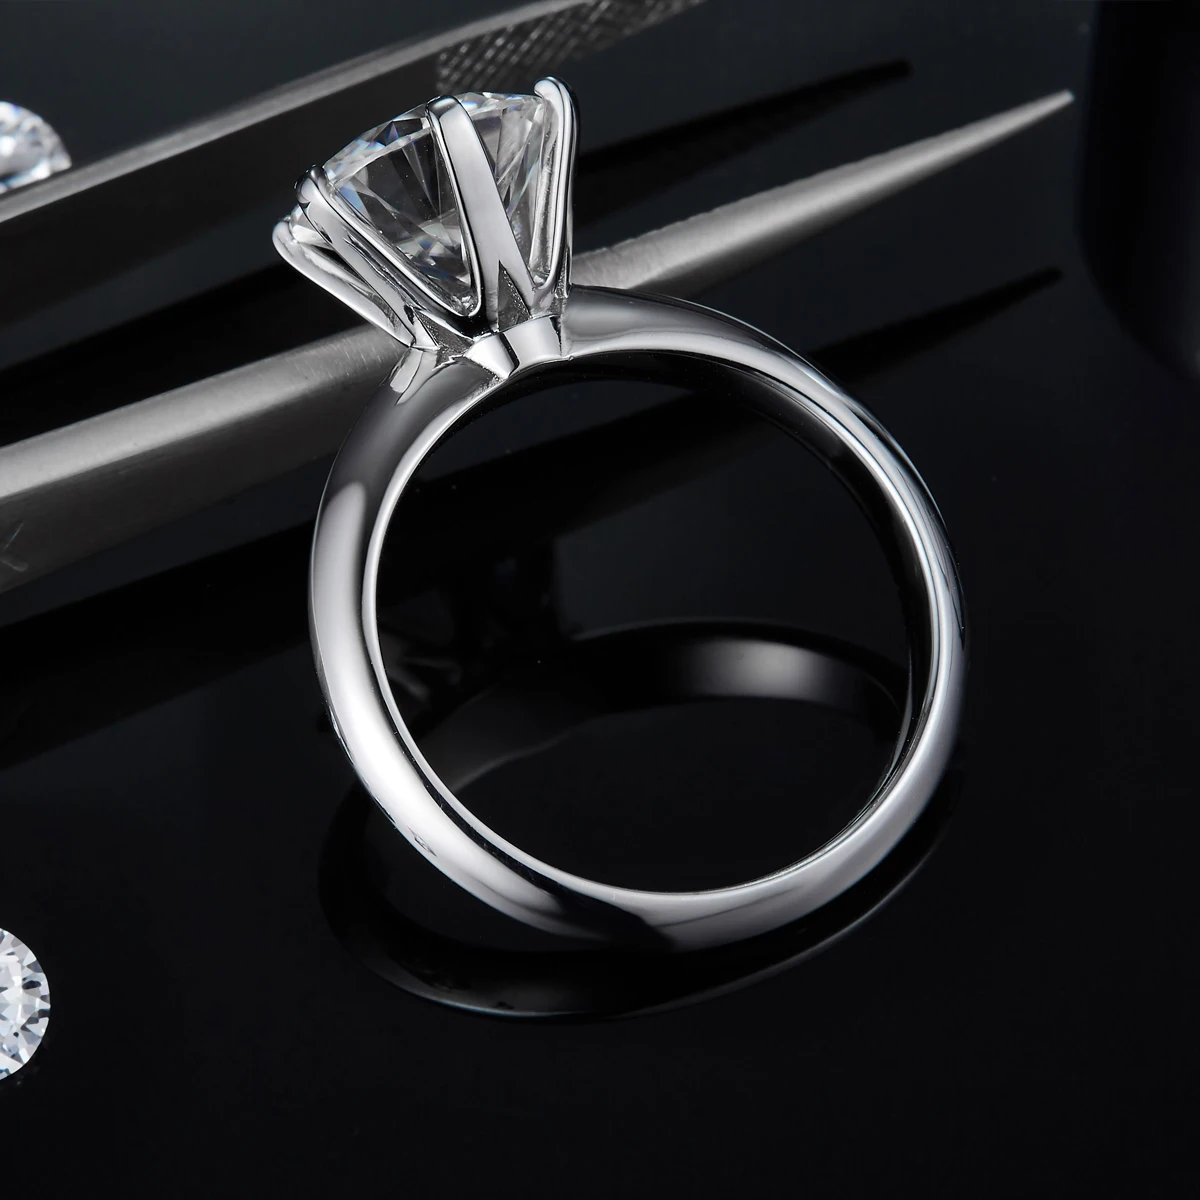 RICA FELIZ 925 Sterling Silver Moissanite Jewelry Sets For Women Wedding Party Jewelry Accessories Earrings & Necklace Gift RicaFeliz • 2022